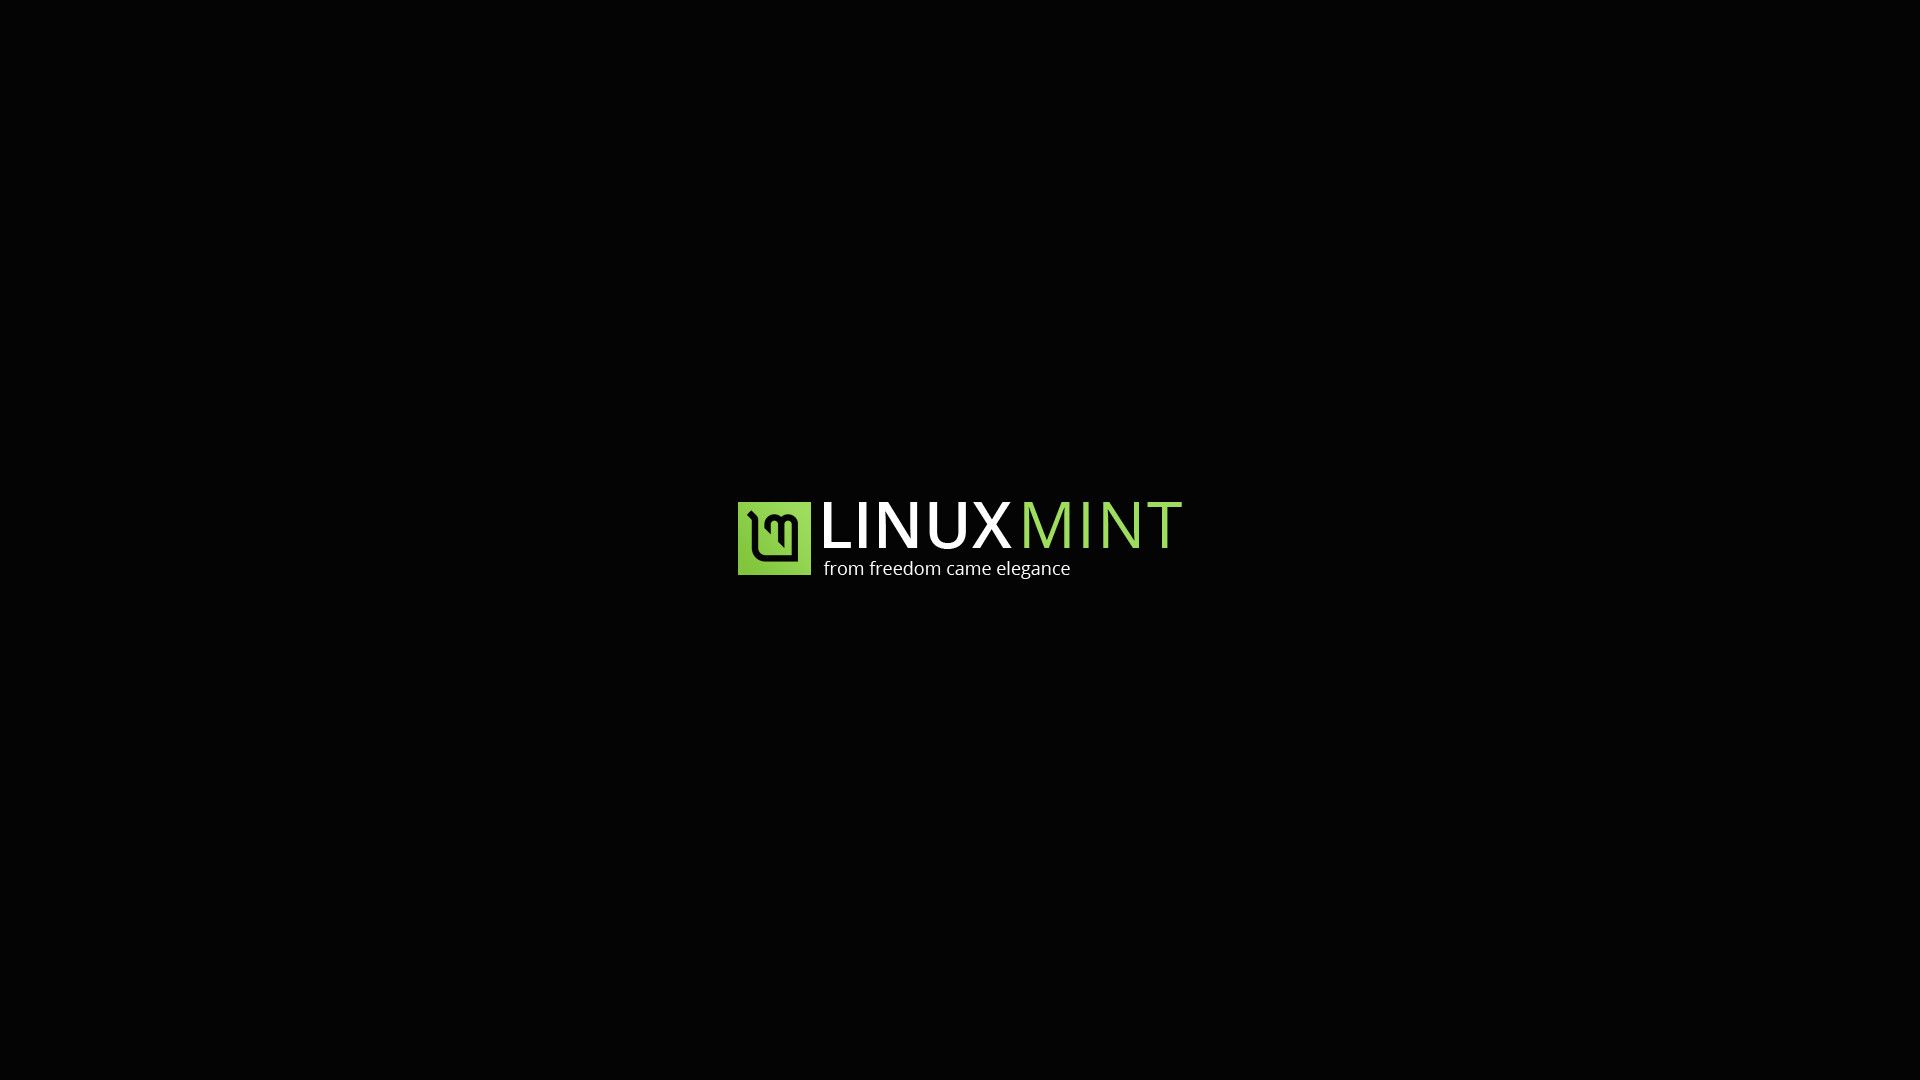 Dark Linux Mint Wallpapers On Wallpaperdog